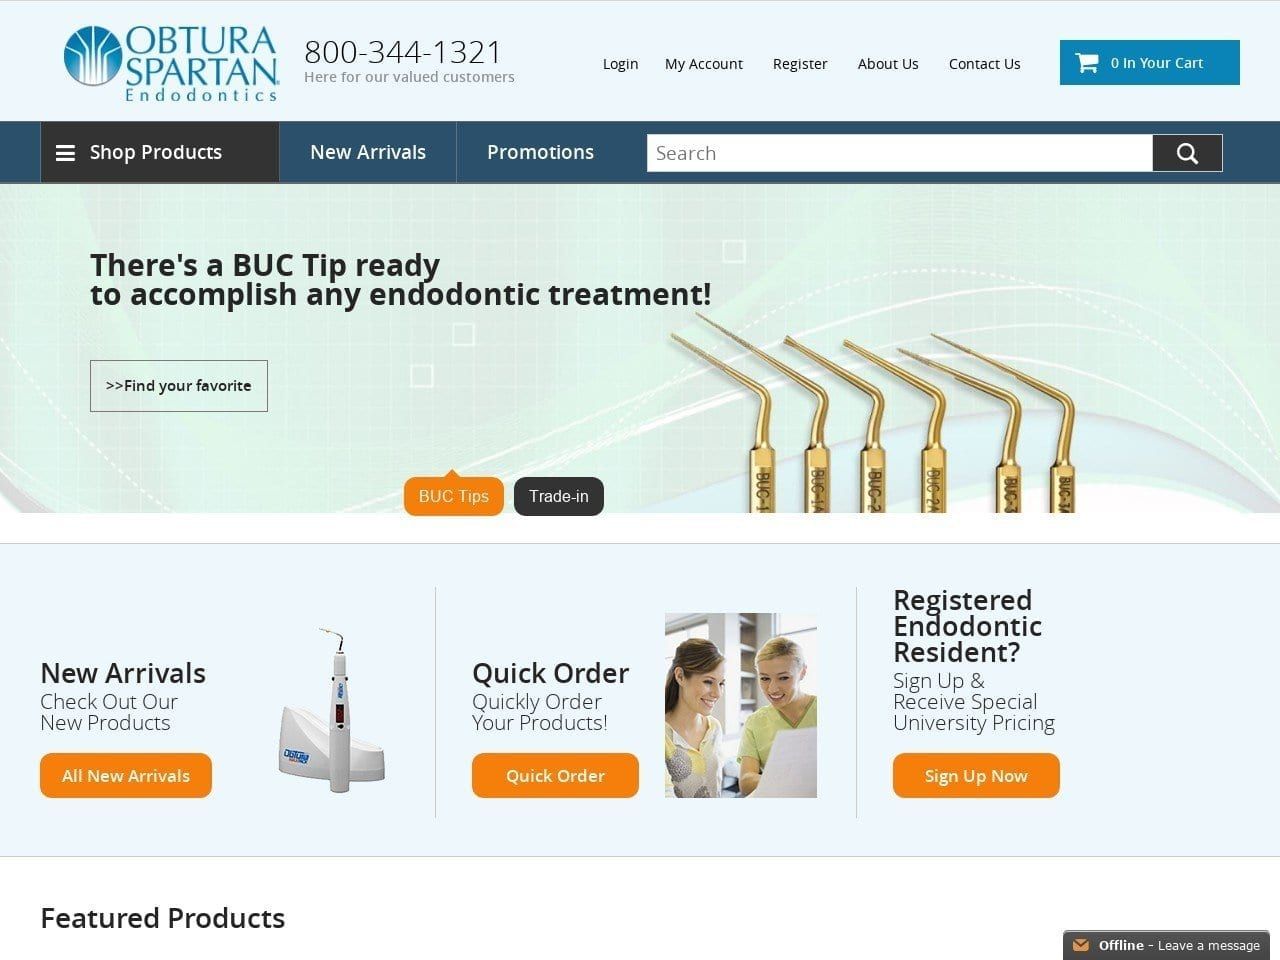 Obtura Spartan Endodontics Website Screenshot from obtura.com